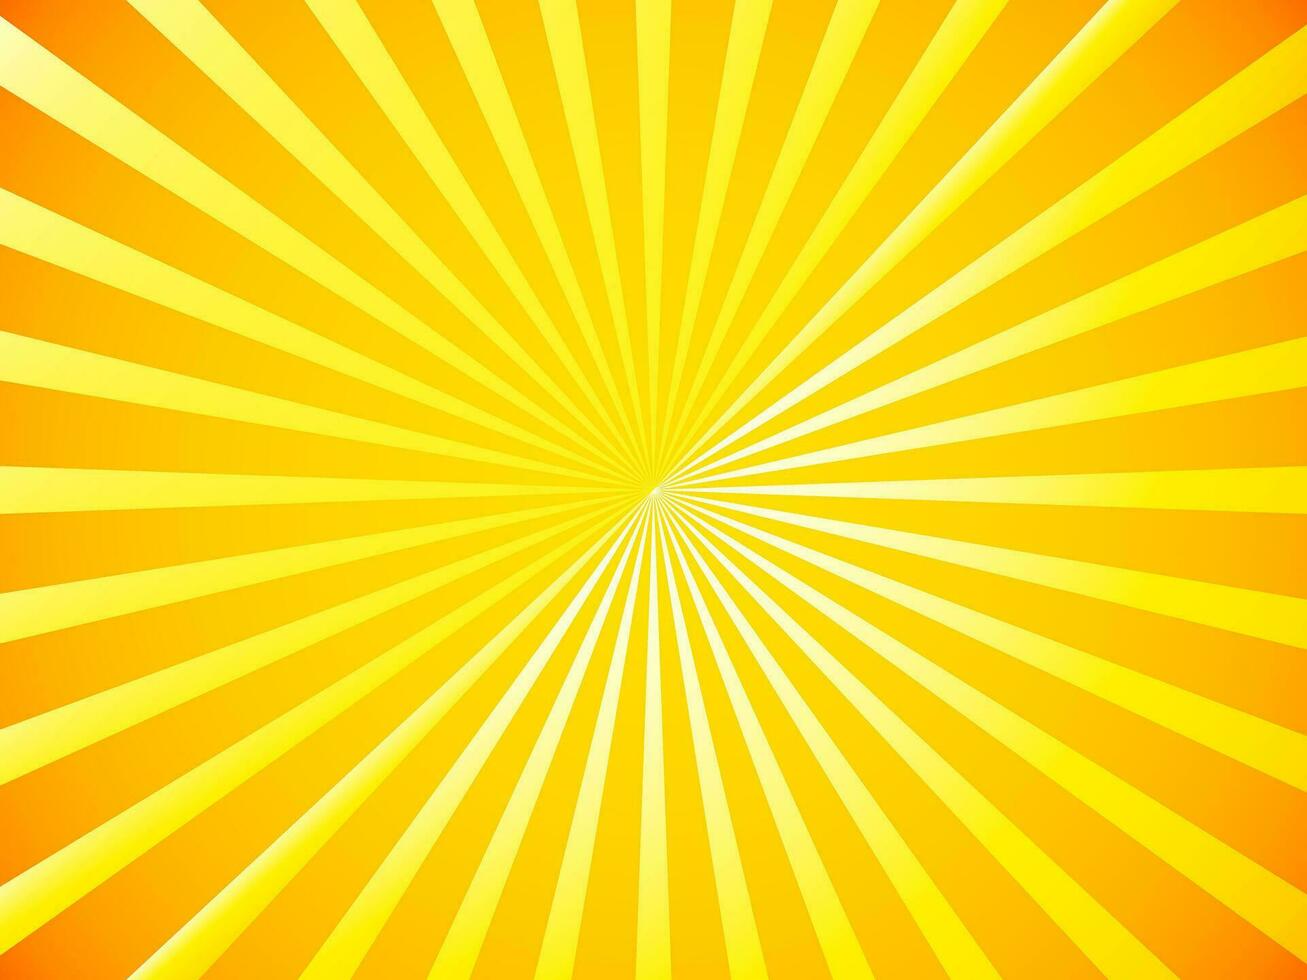 Sunburst Poster Sun rays sunburst background vector